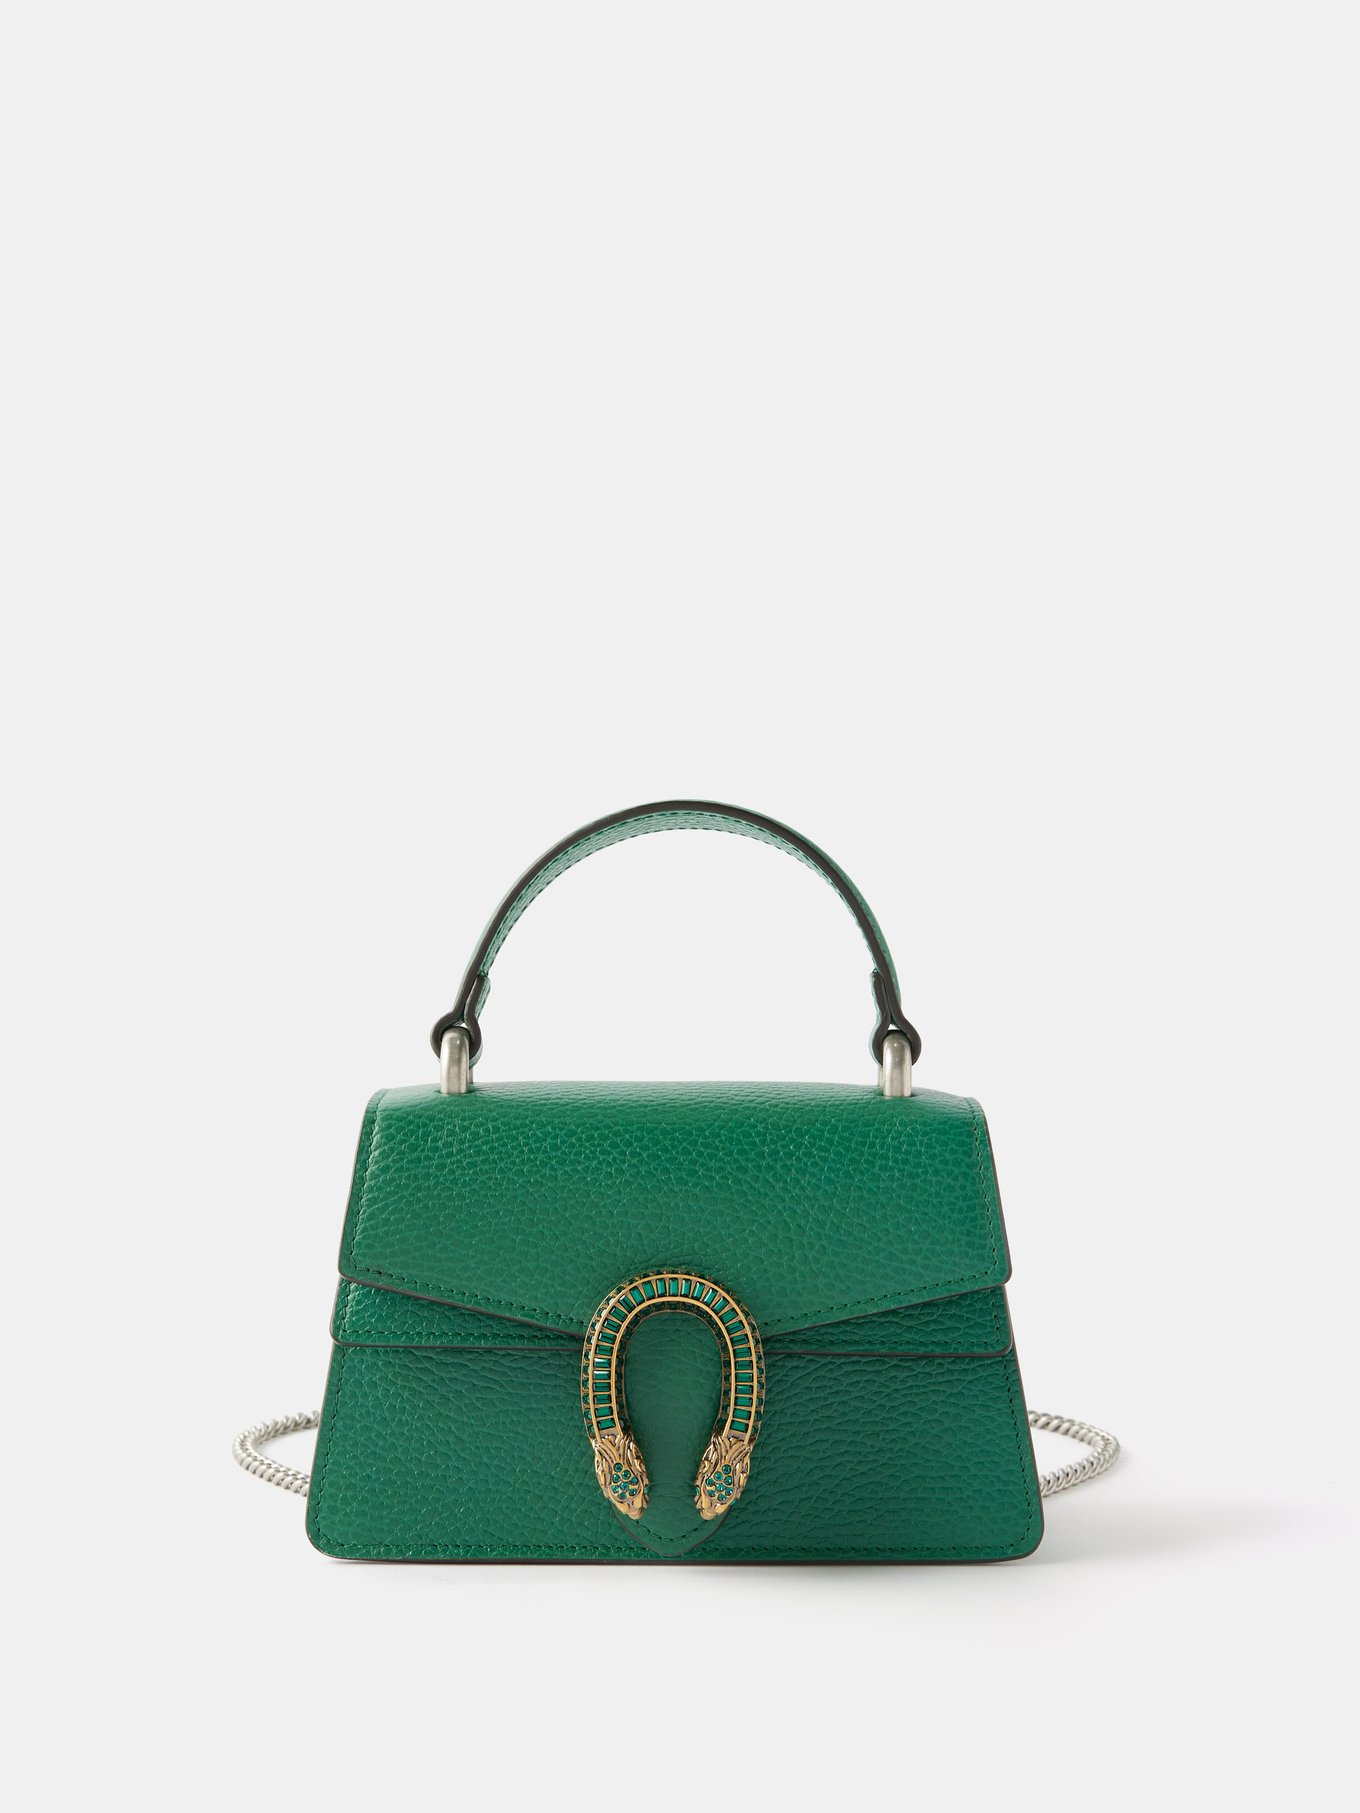 Green Dionysus supermini leather handbag, Gucci